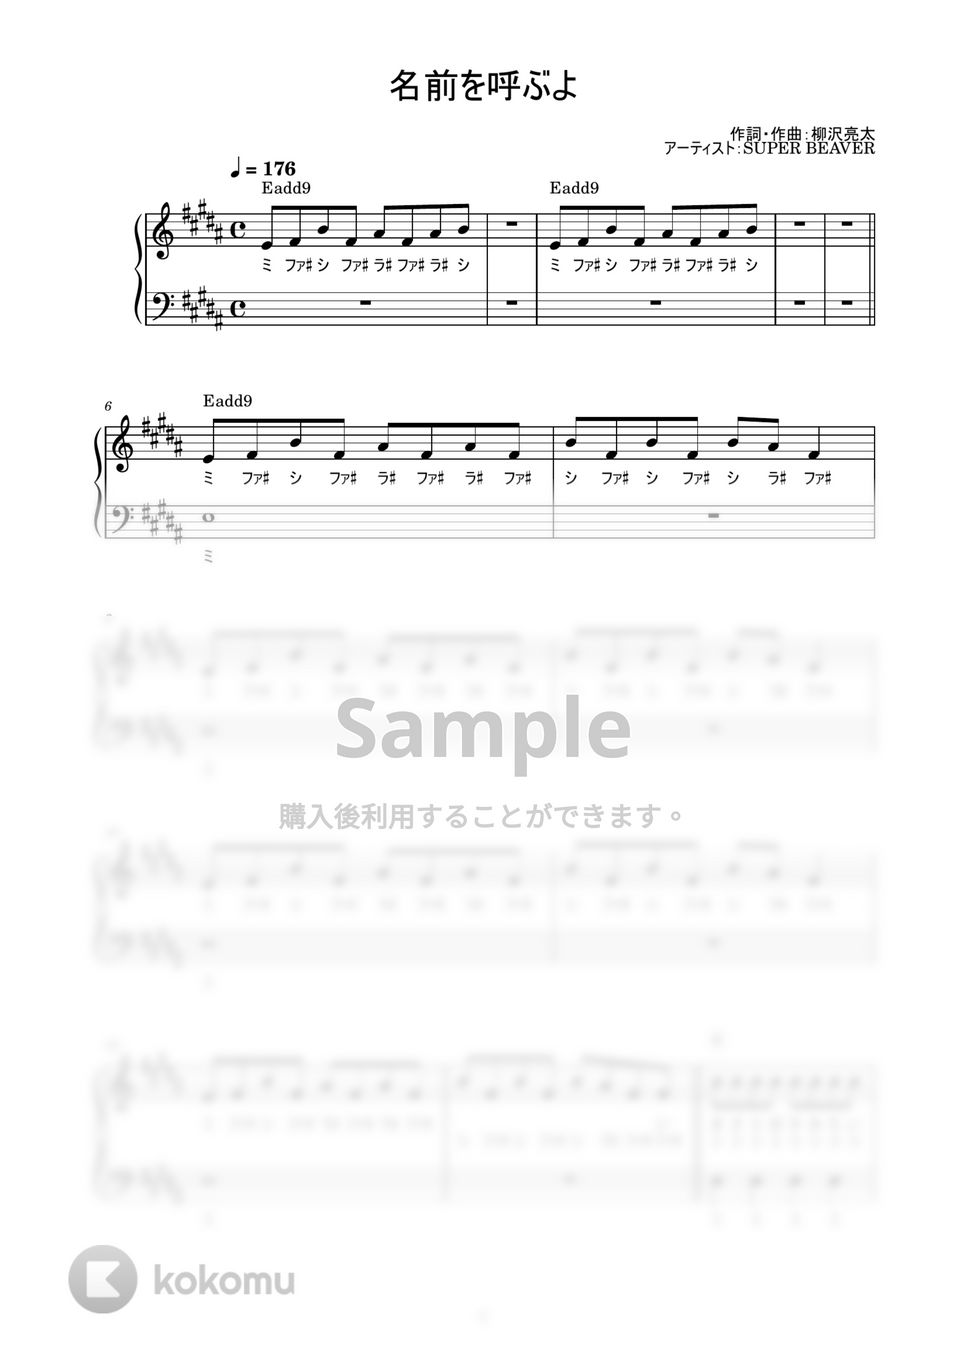 SUPER BEAVER - 名前を呼ぶよ (かんたん / 歌詞付き / ドレミ付き / 初心者) by piano.tokyo